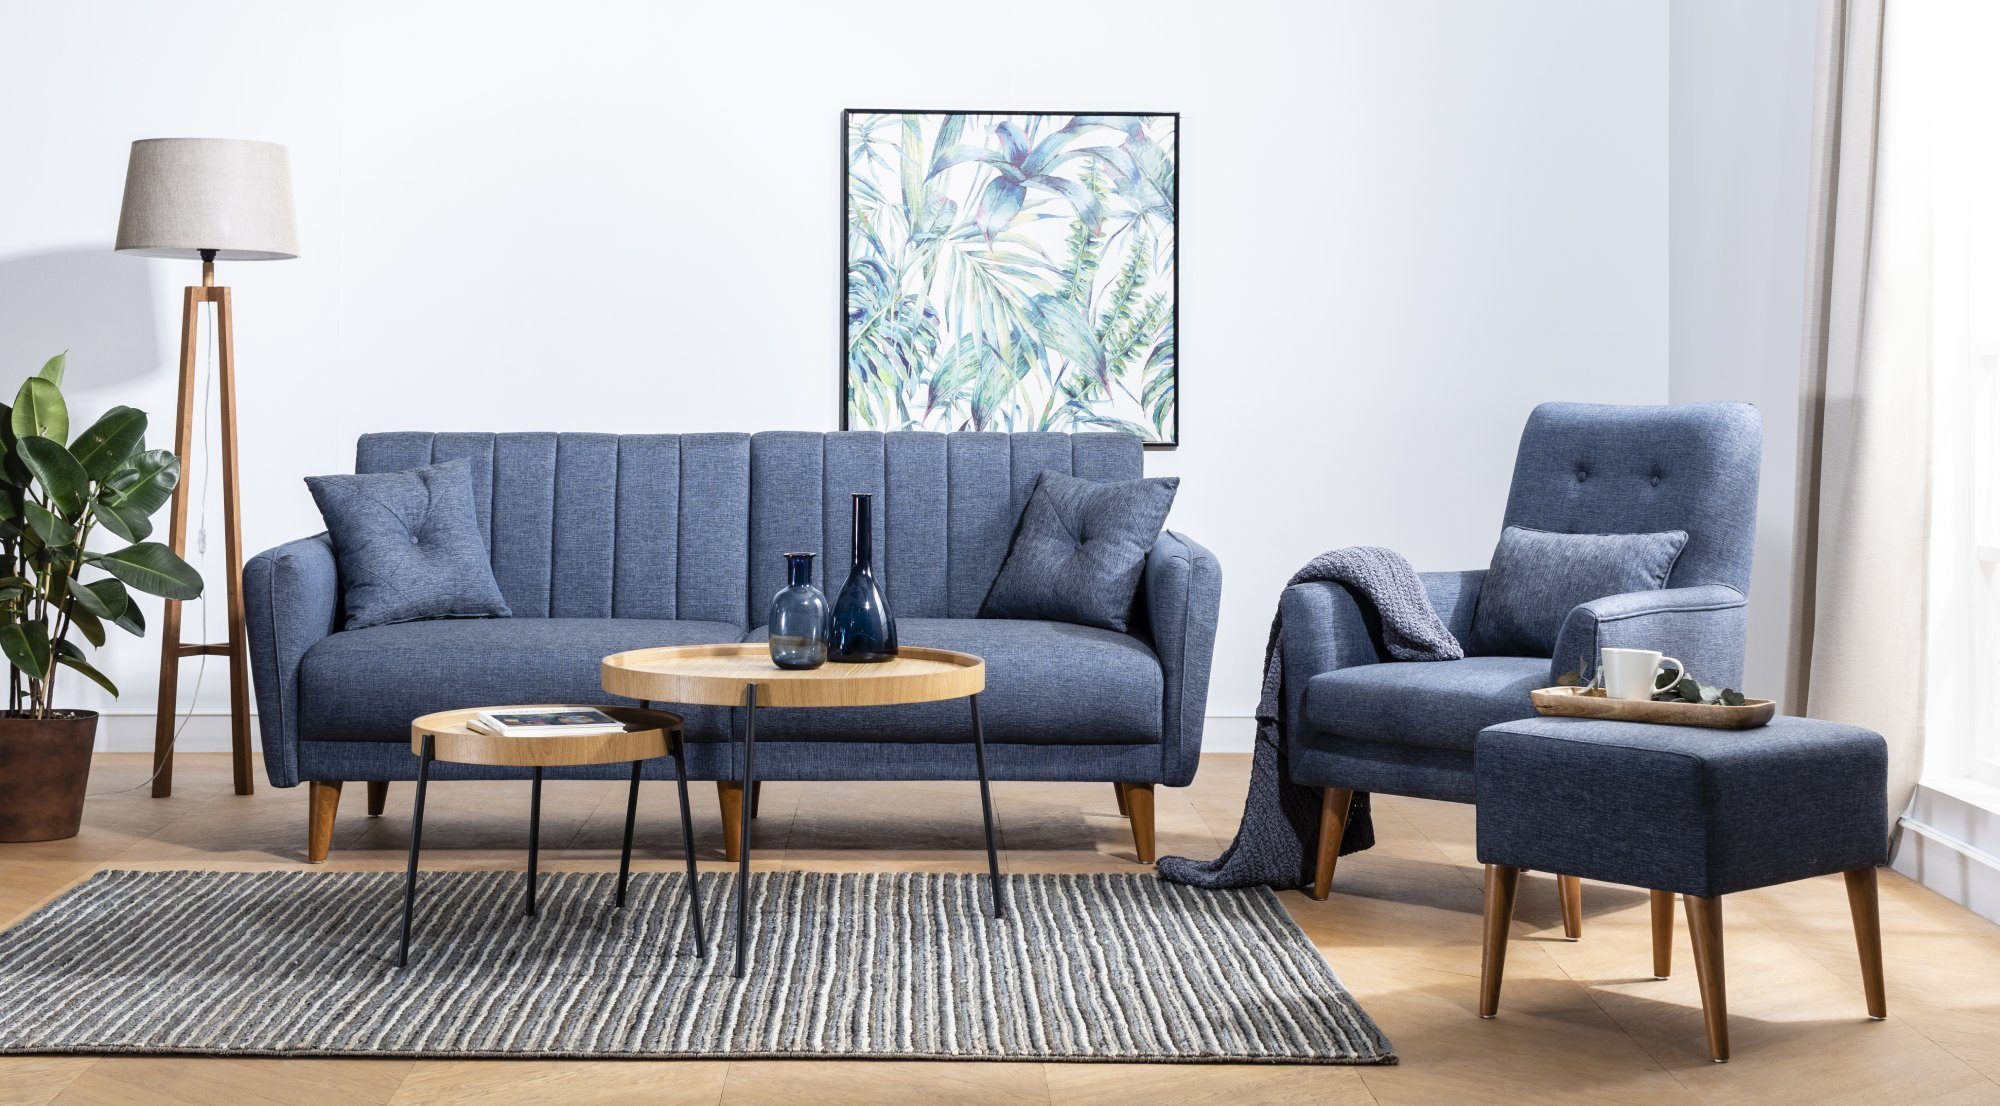 Gozos Sitzgruppe Mammo Sitzgruppe Series Sofa + Sessel + man, Hochwertige set, (205 x 83 x 82 cm, &, 50 x 46 x 45 cm, Sofa & man), mit bequemer Polsterung Anthrazit